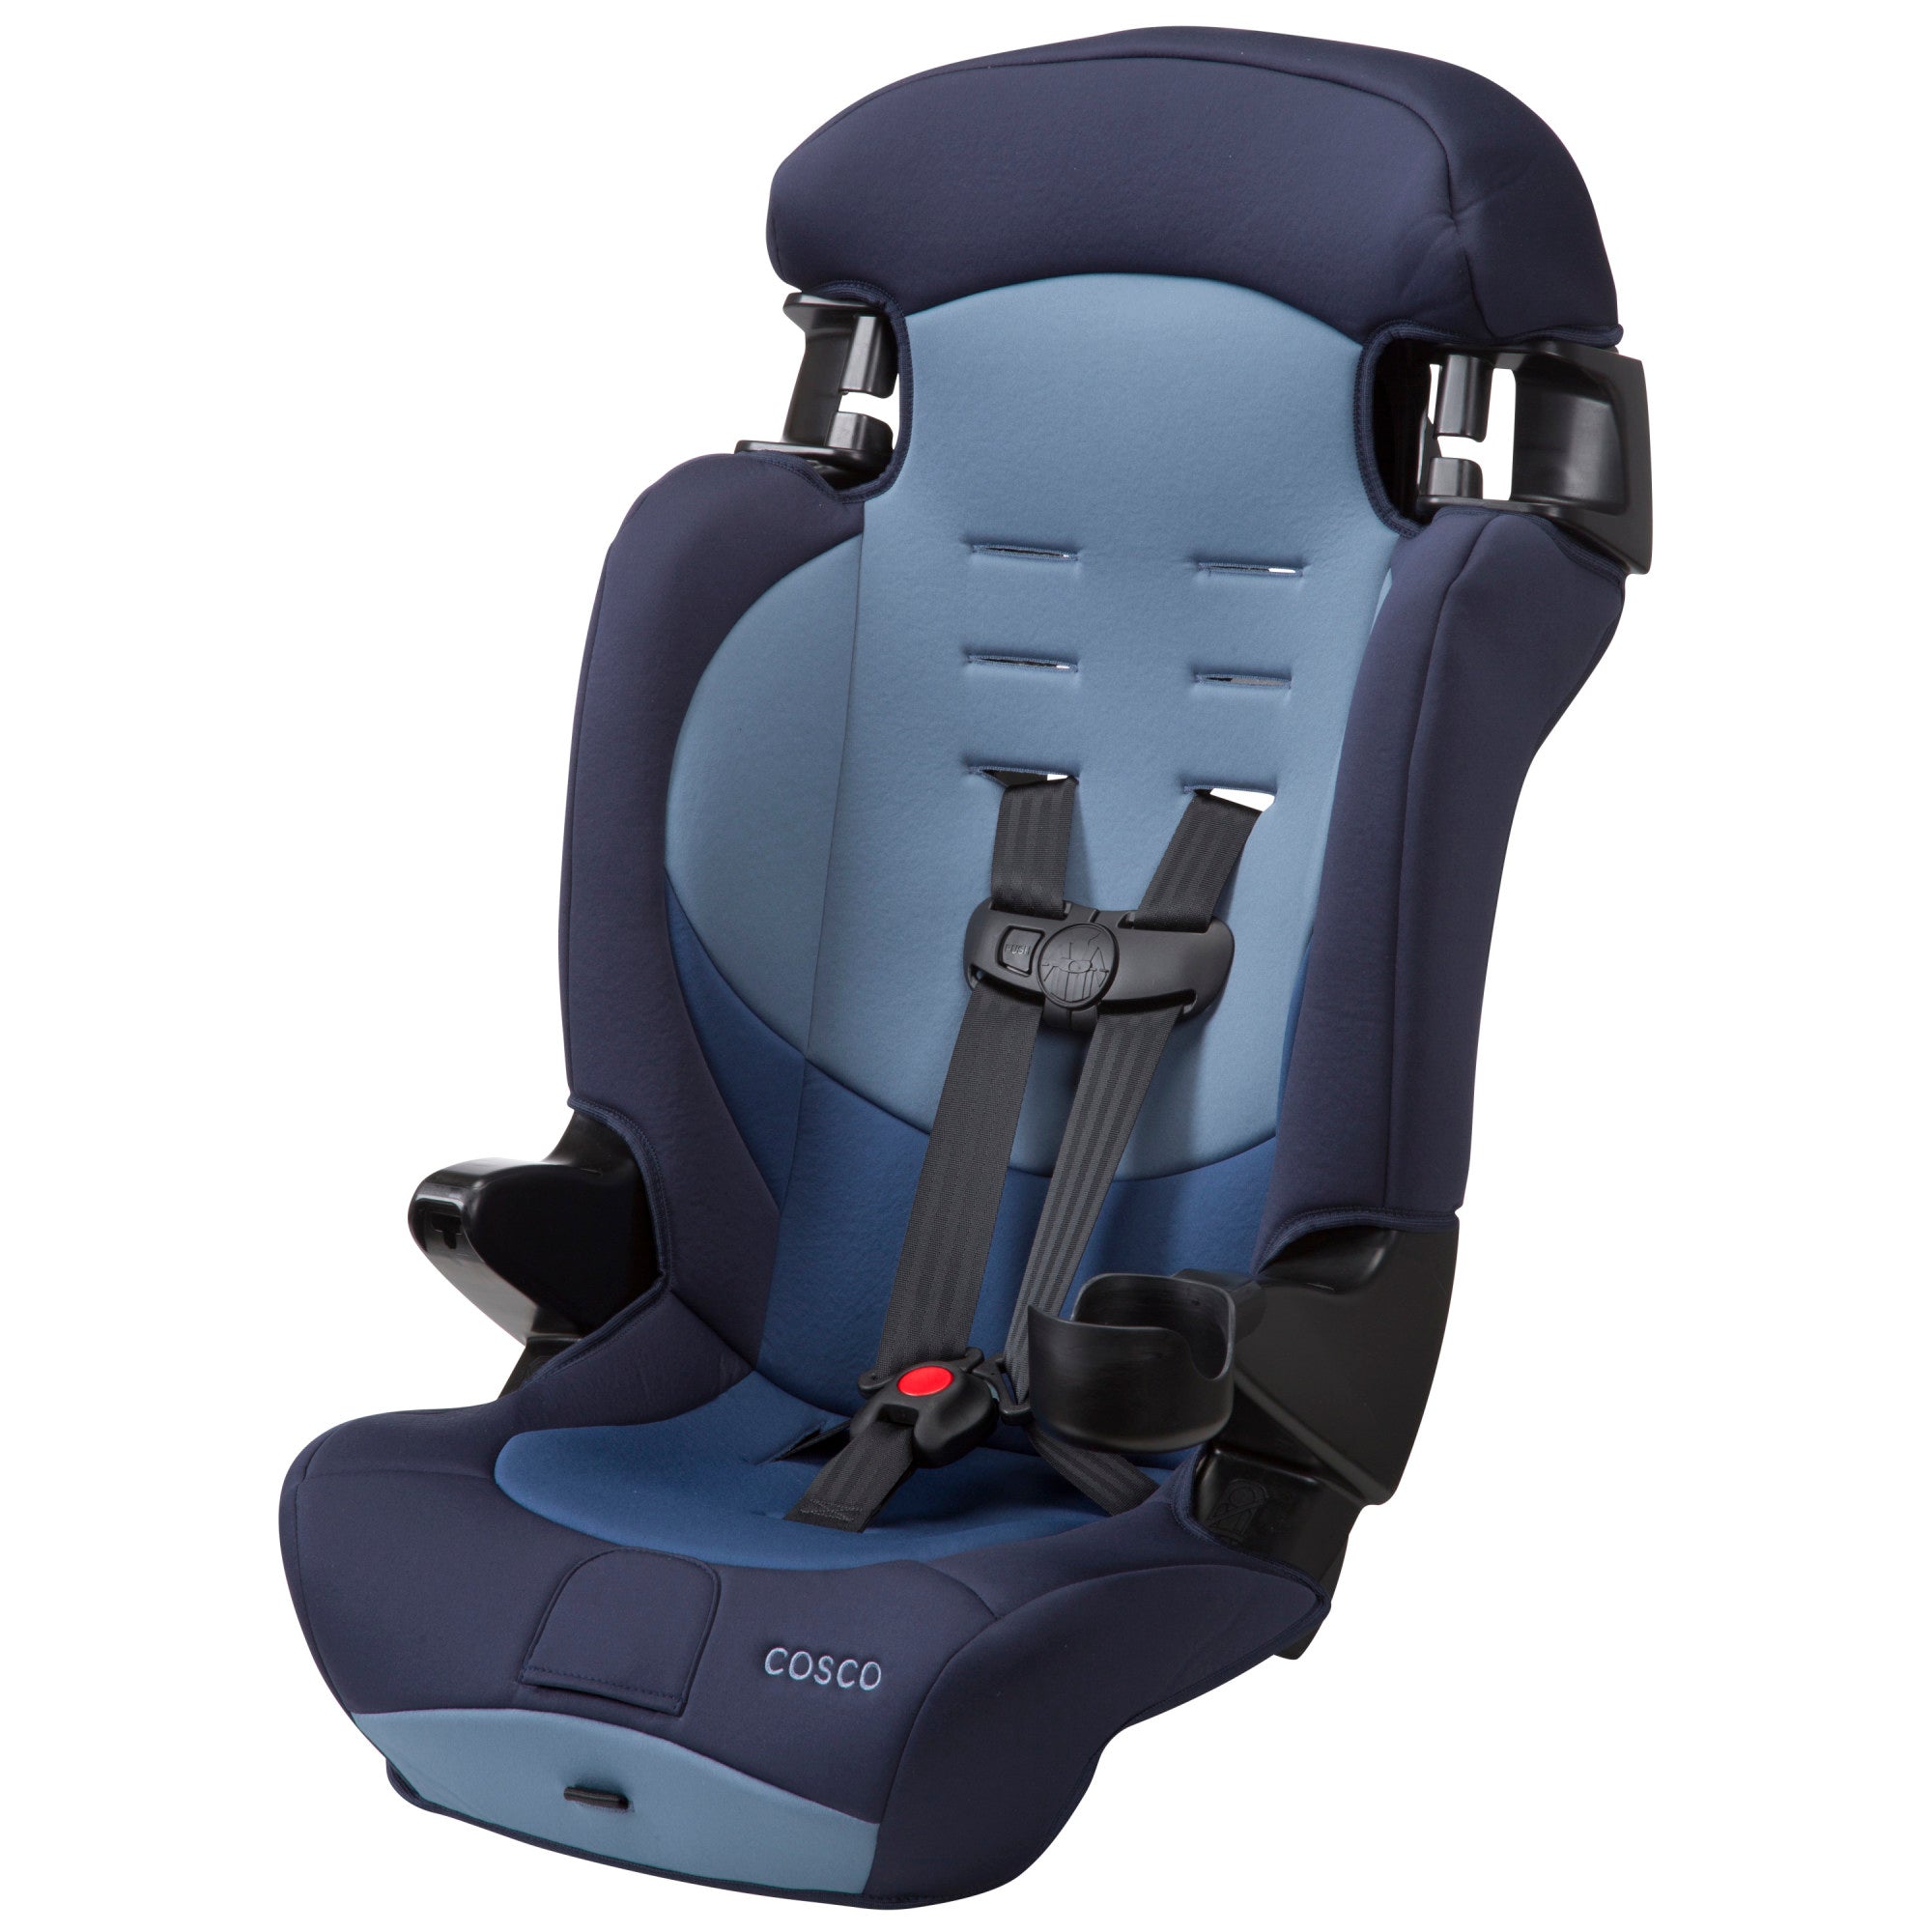 Finale DX 2-in-1 Booster Car Seat - Sport Blue